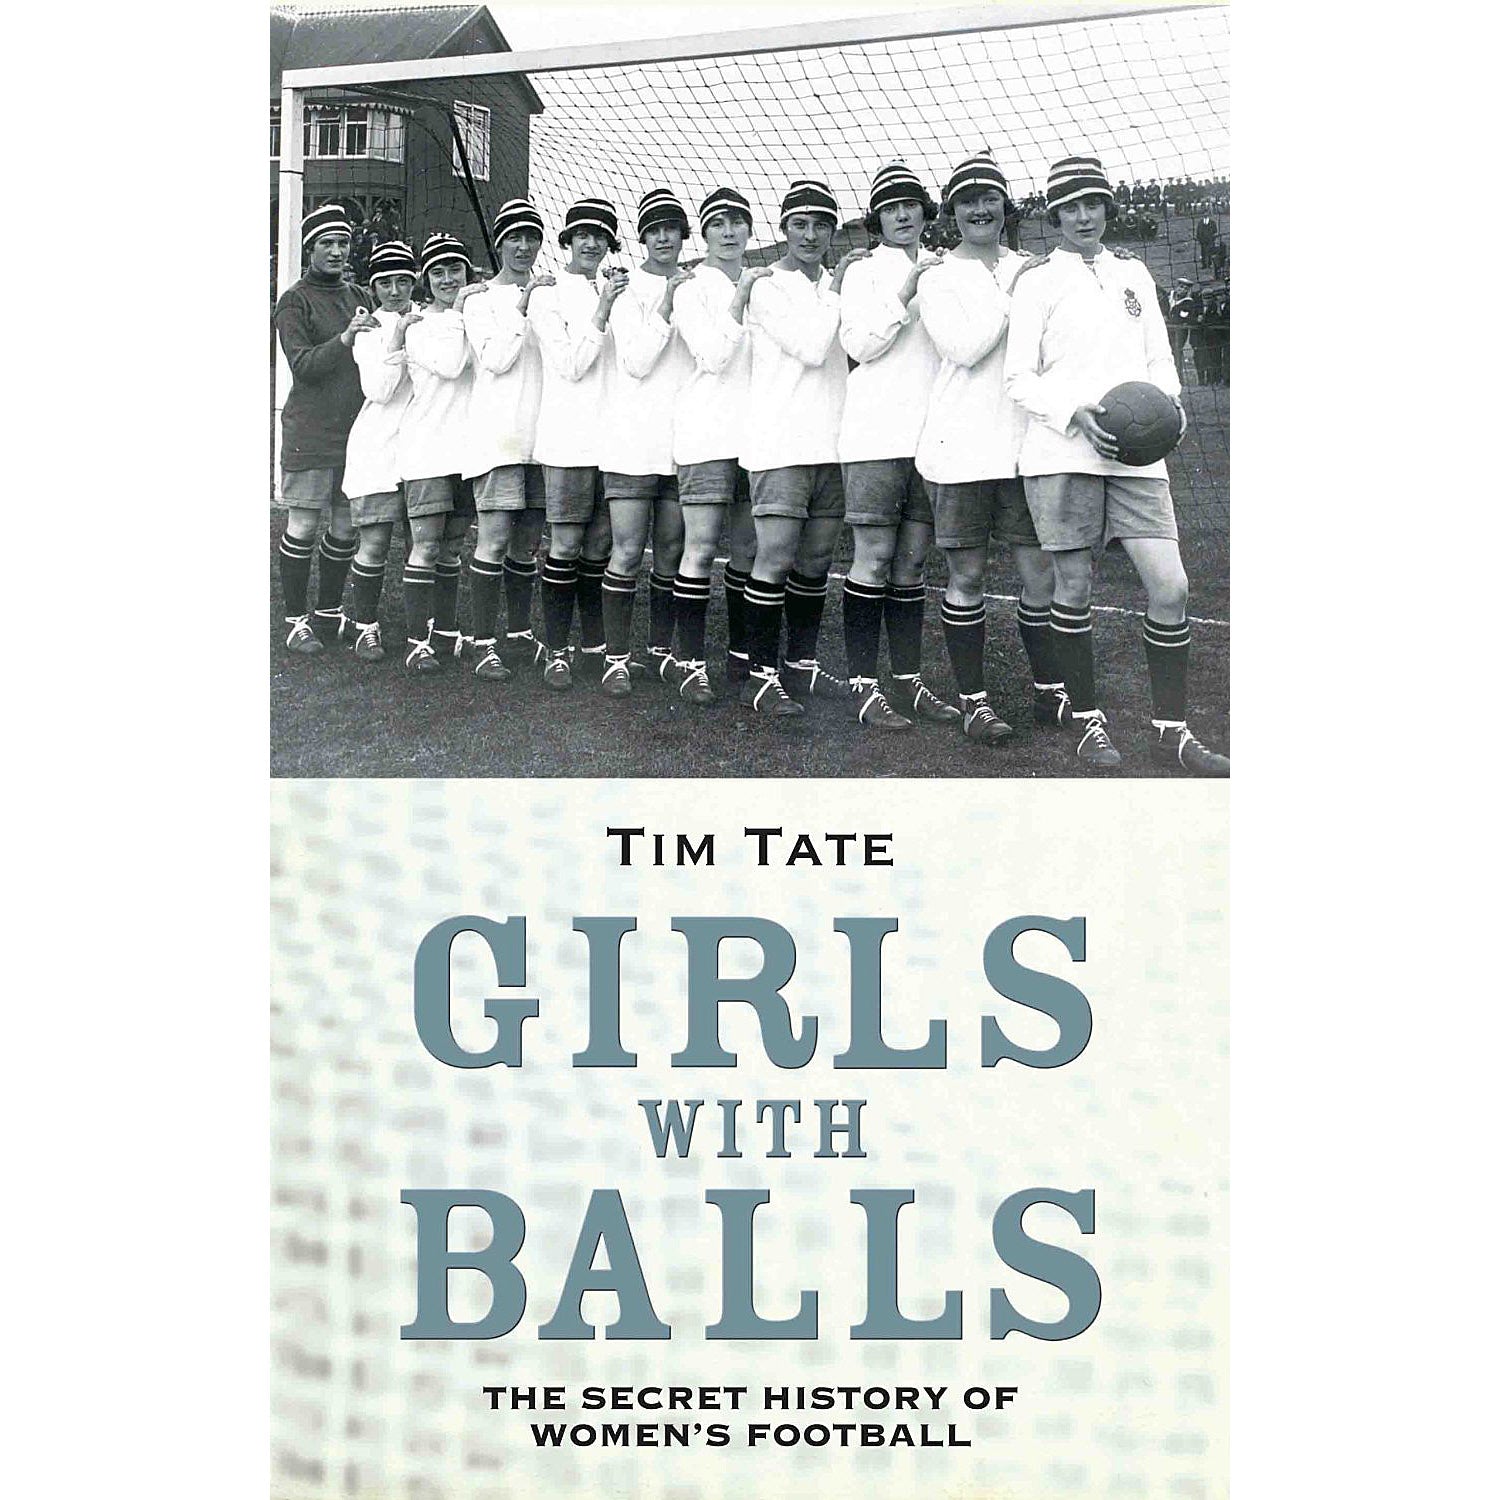 Sale • Women's Football Histories